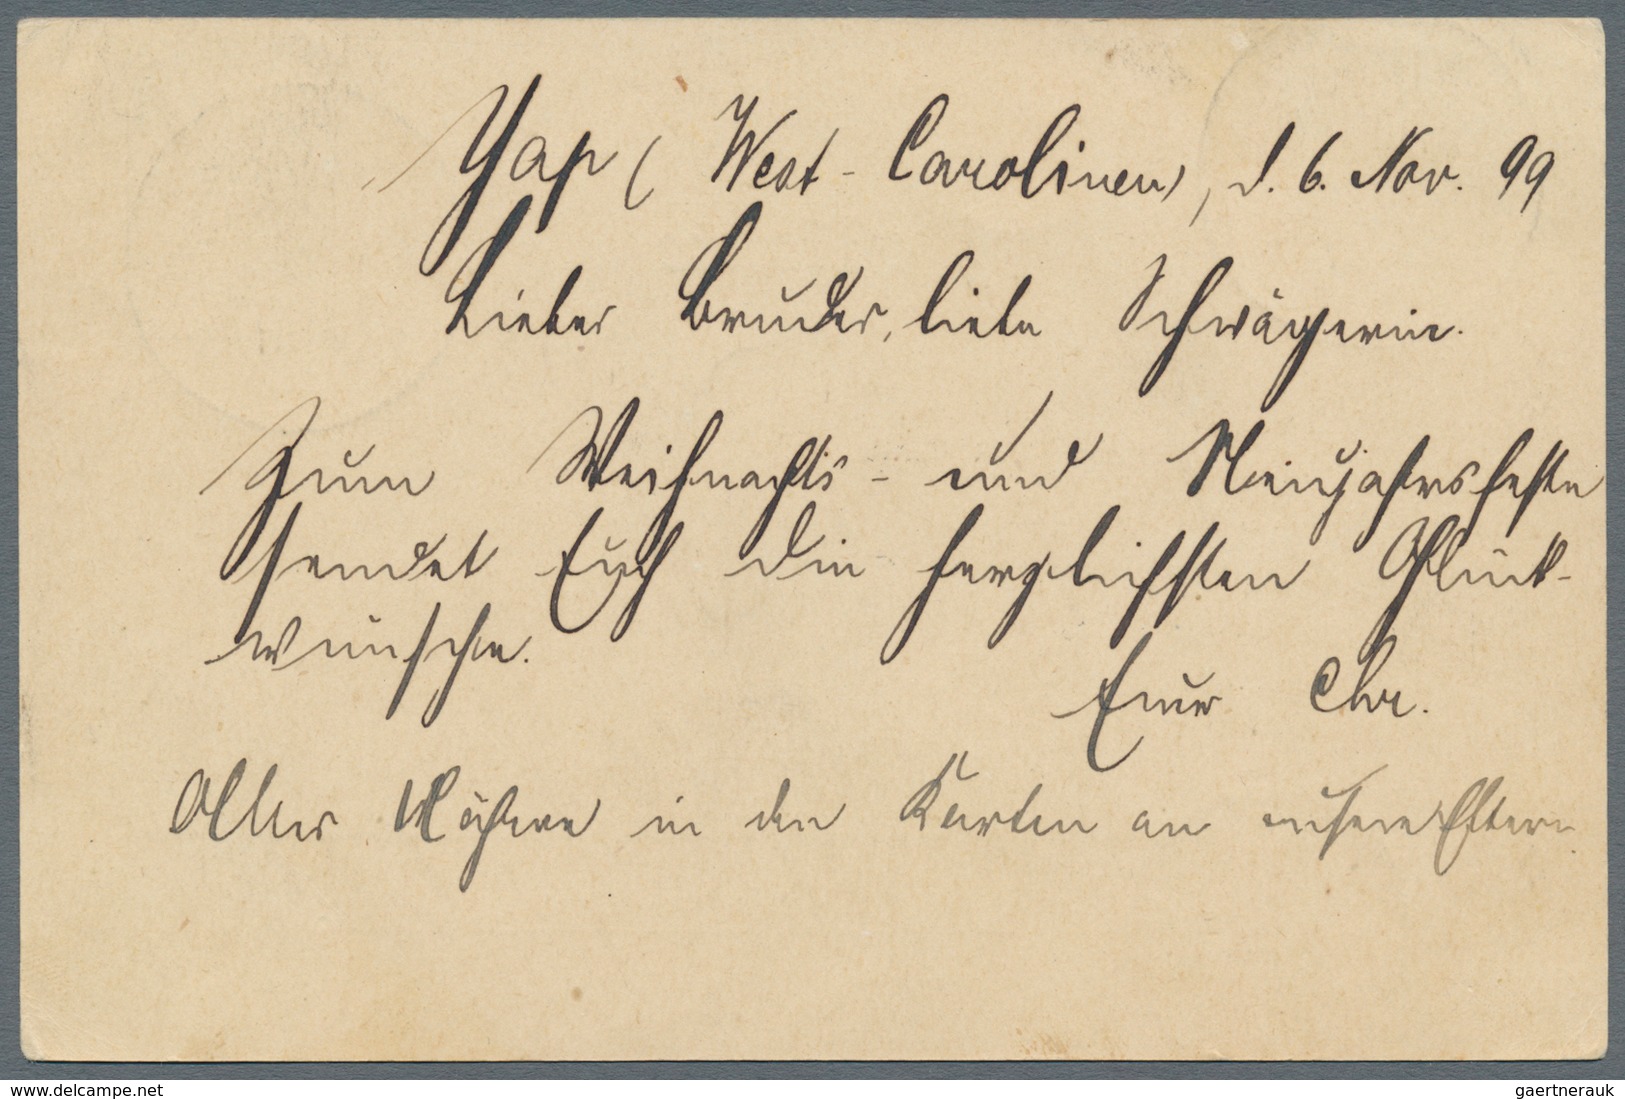 Deutsche Kolonien - Karolinen - Stempel: "Yap (West-Carolinen) 6.11.99", Handschriftliche Datierung - Karolinen